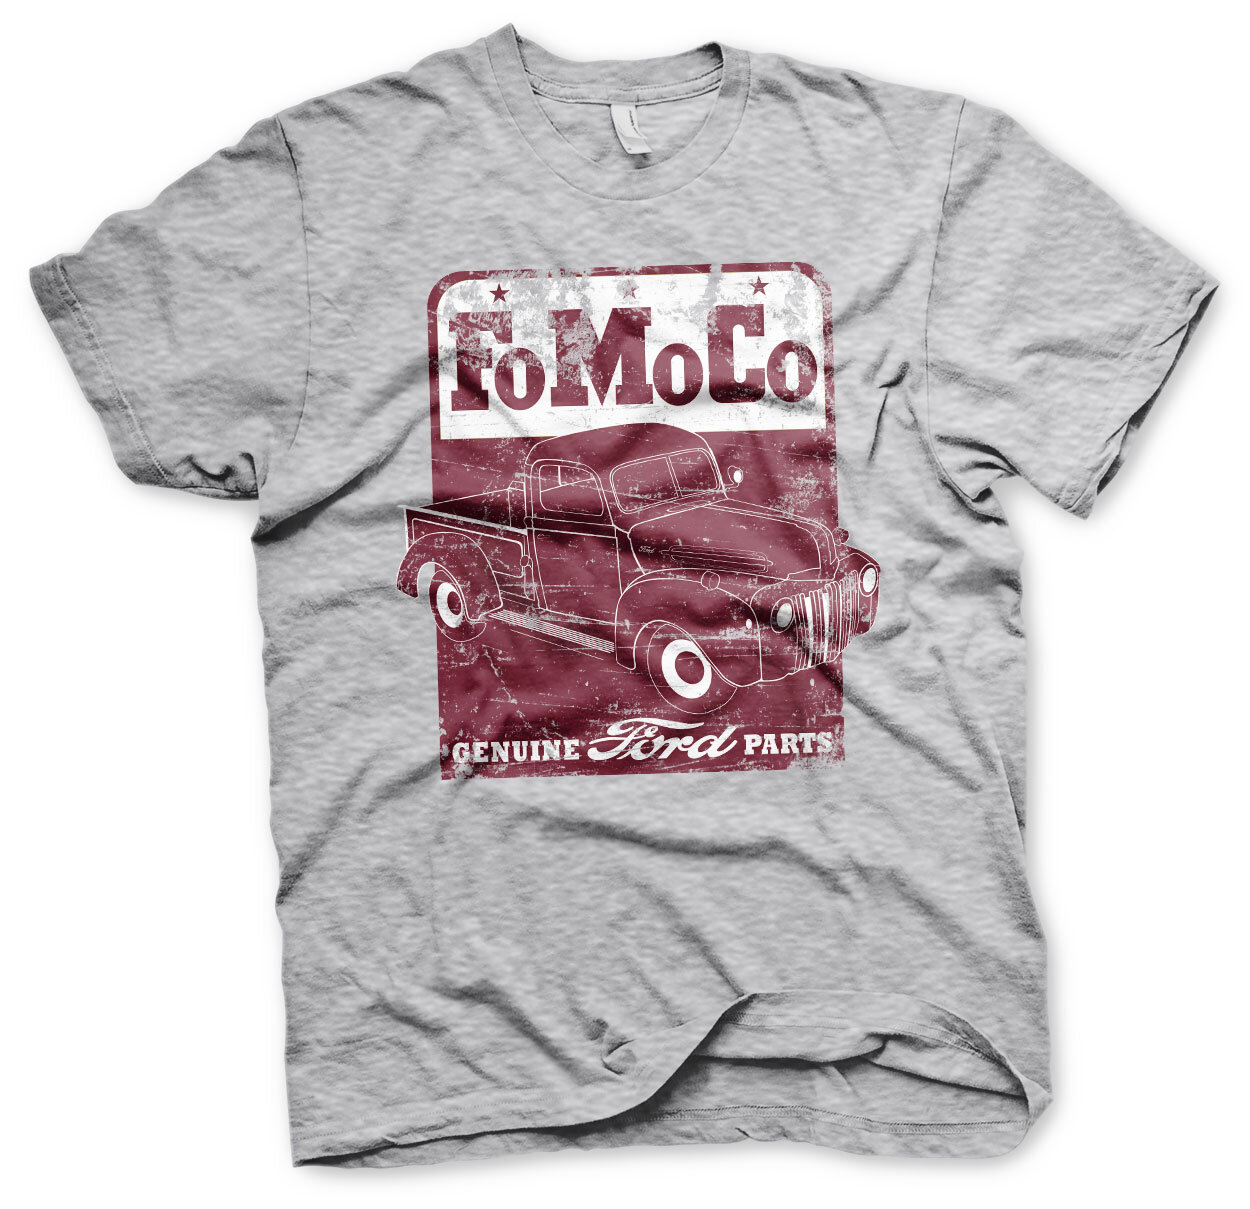 FoMoCo - Genuine Ford Parts T-Shirt